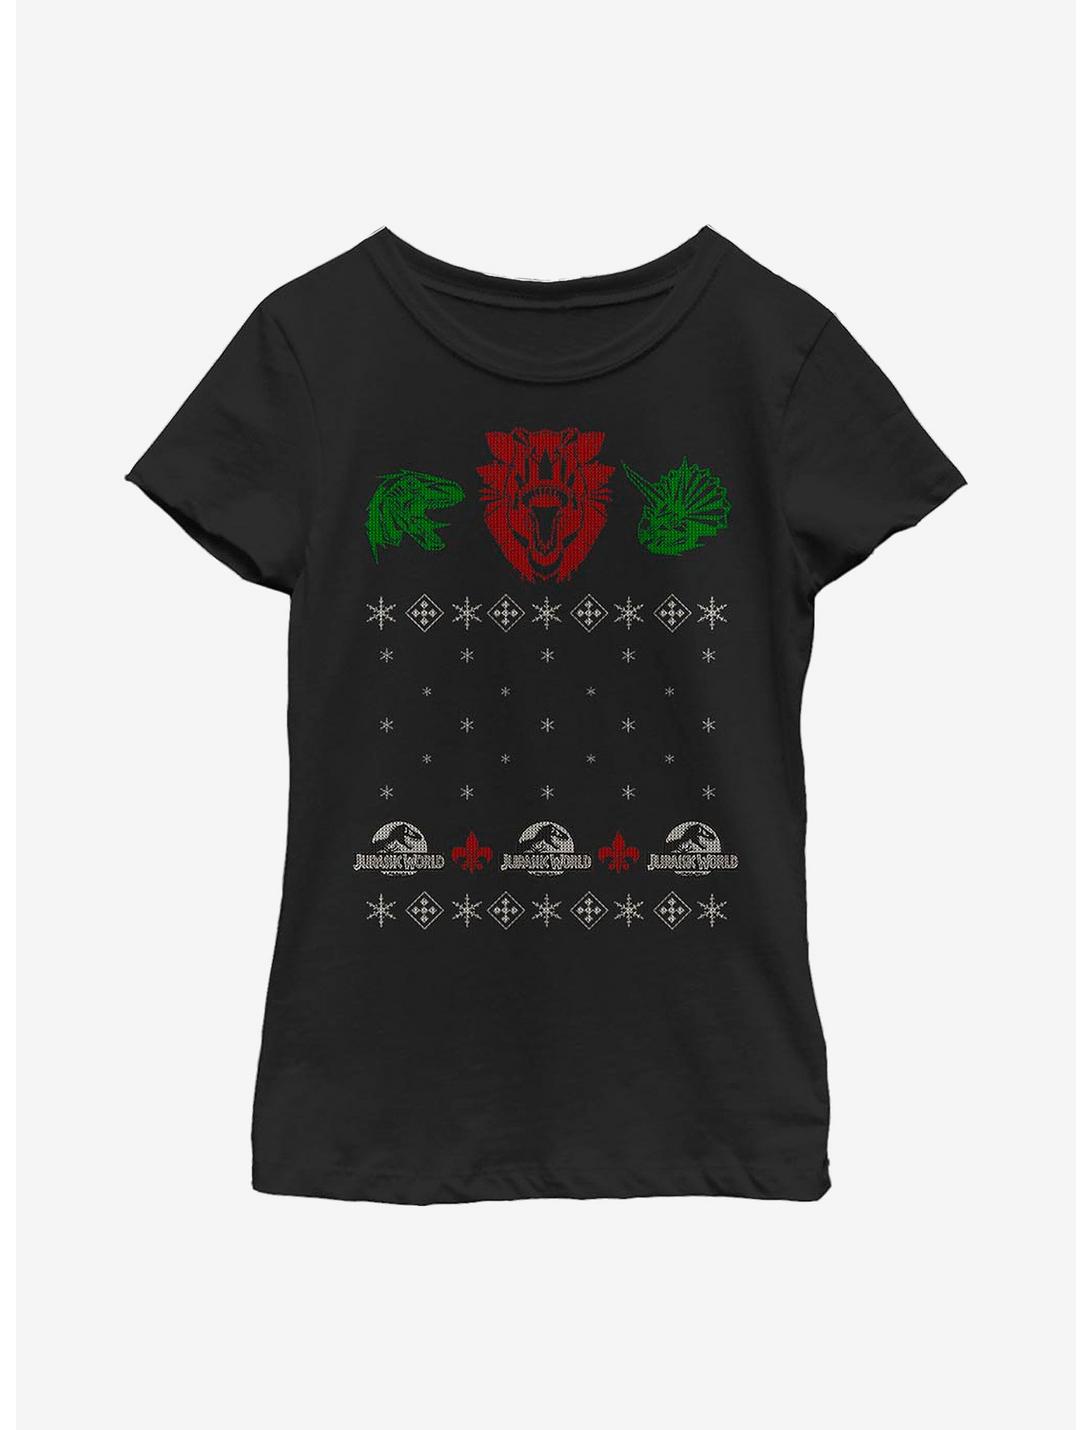 Jurassic World Dino Christmas Sweater Pattern Youth Girls T-Shirt, BLACK, hi-res